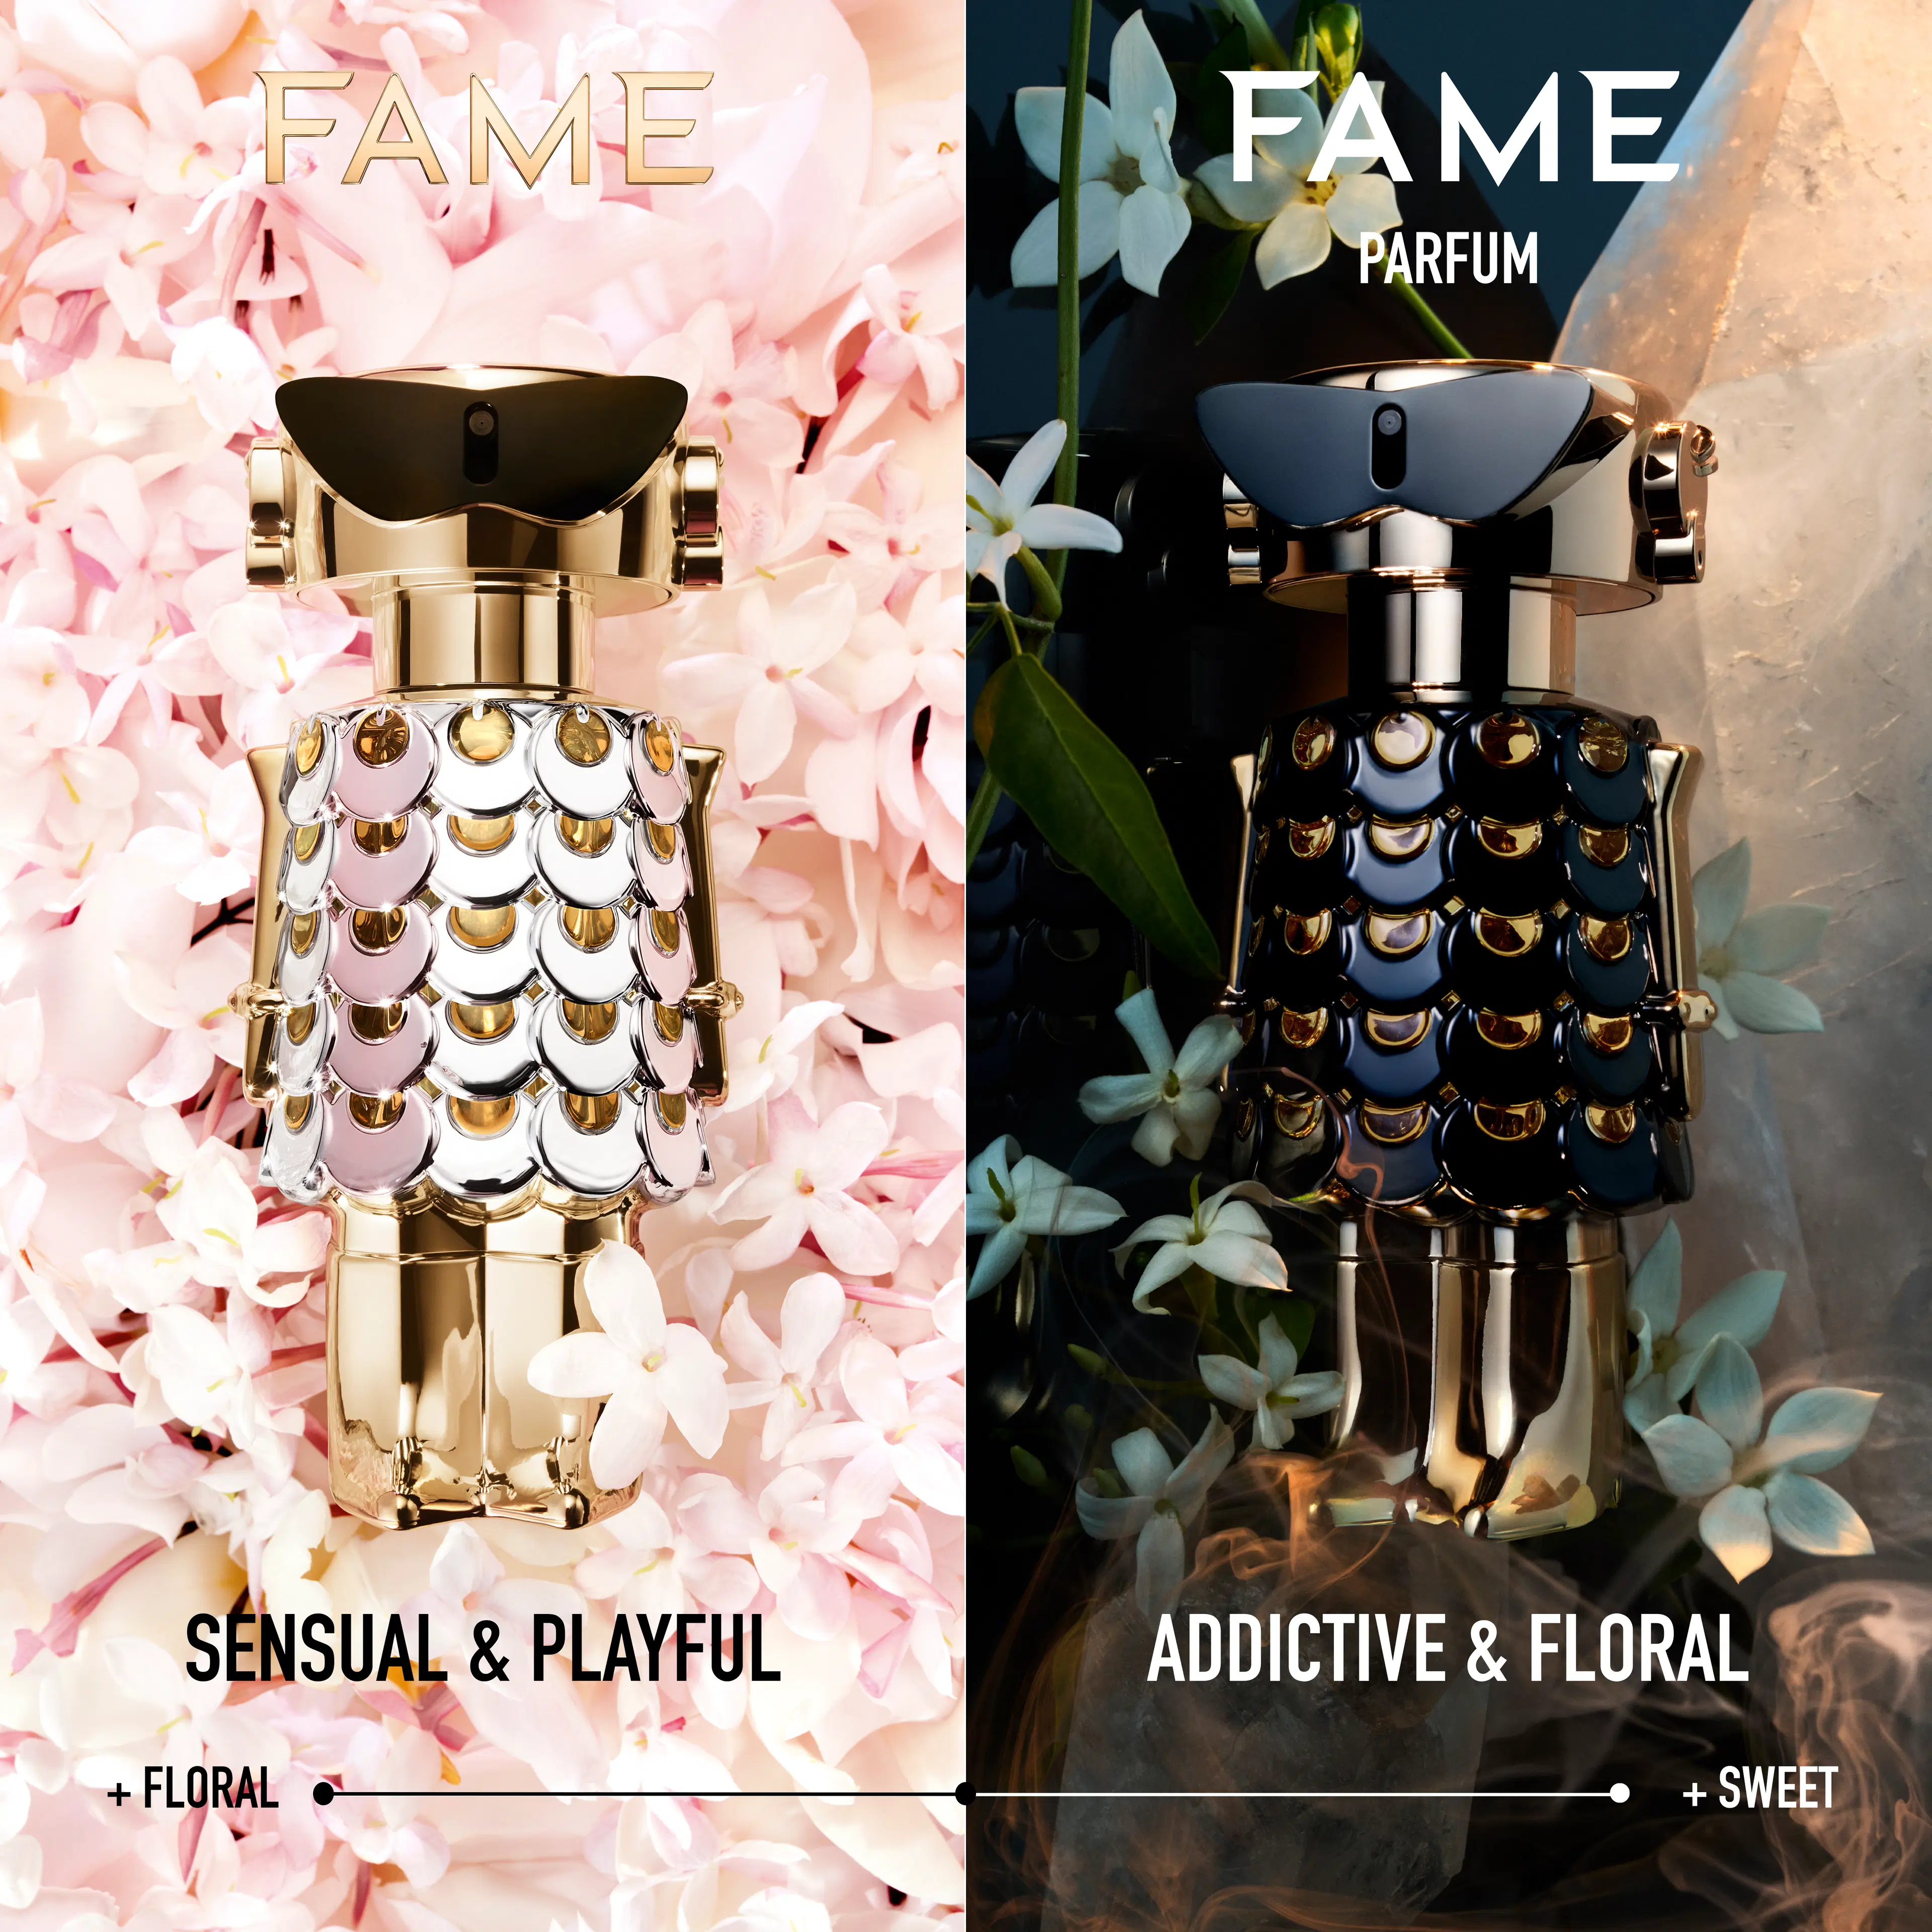 Rabanne Fame Parfum tuoksu 30 ml